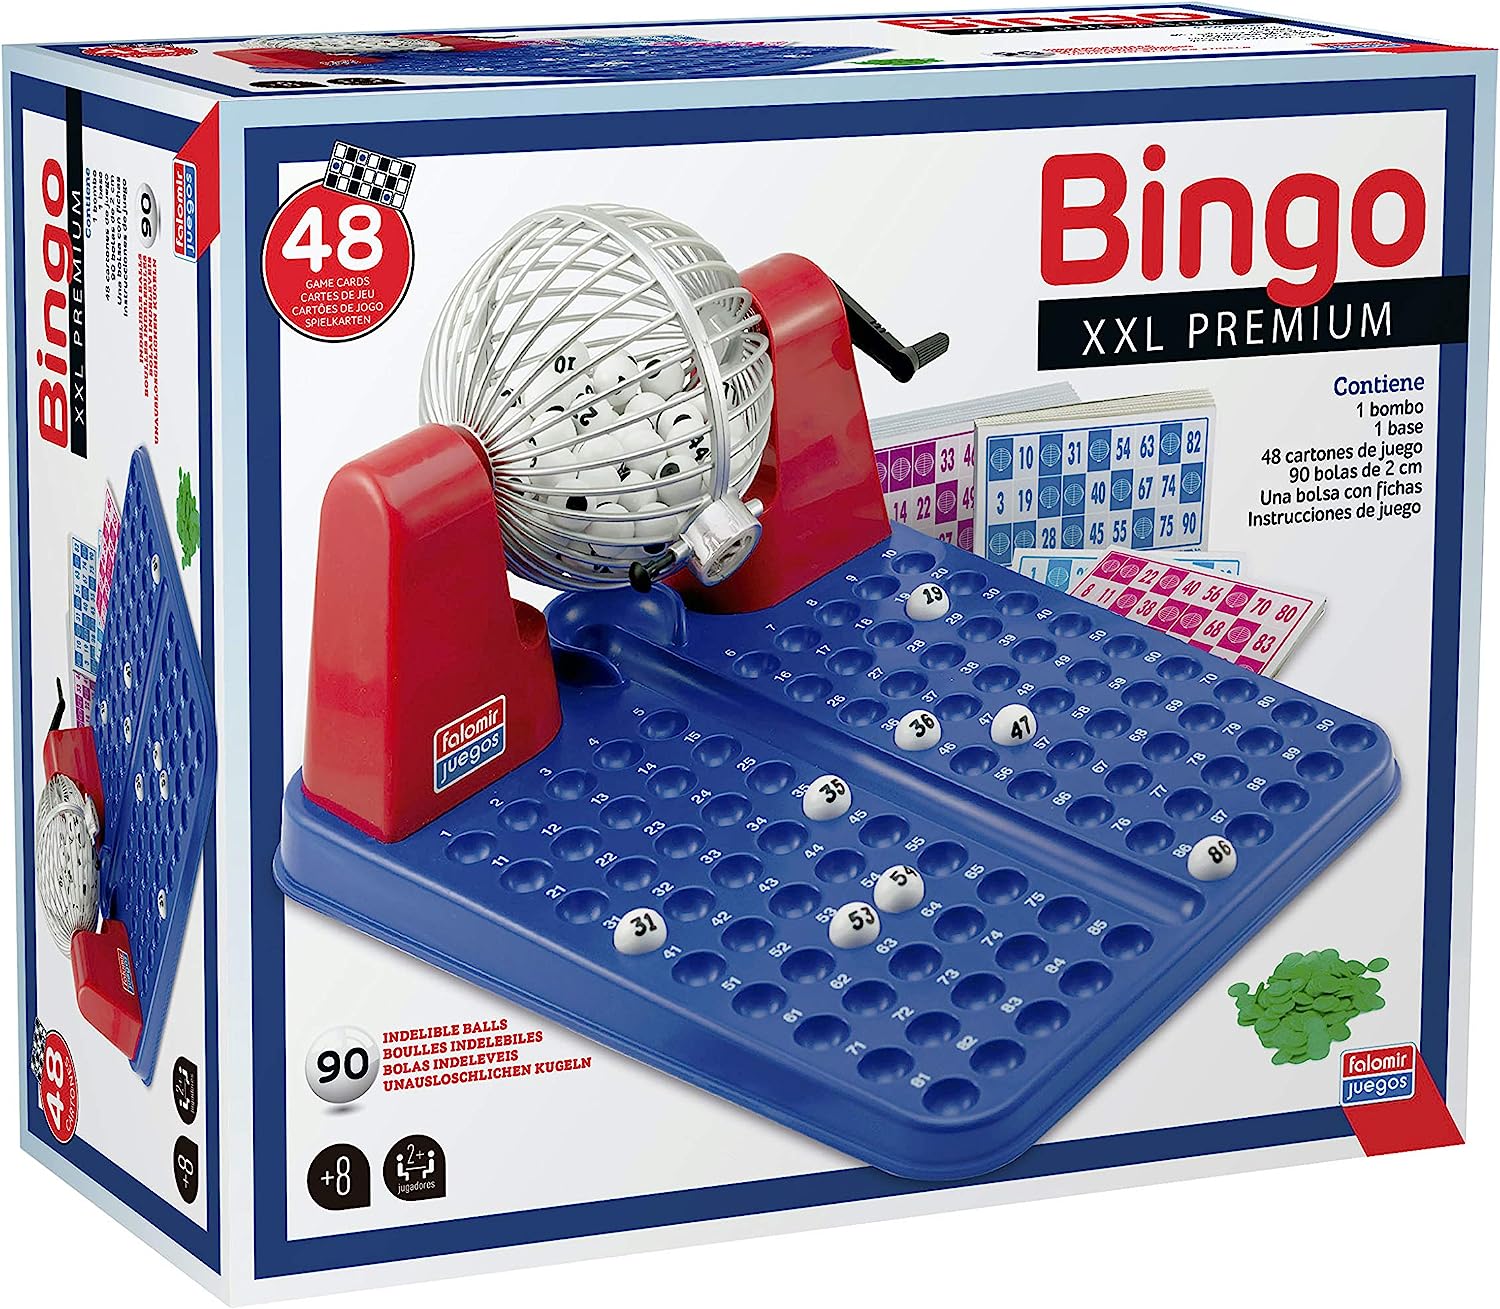 Ver categoría de falomir – bingo xxl